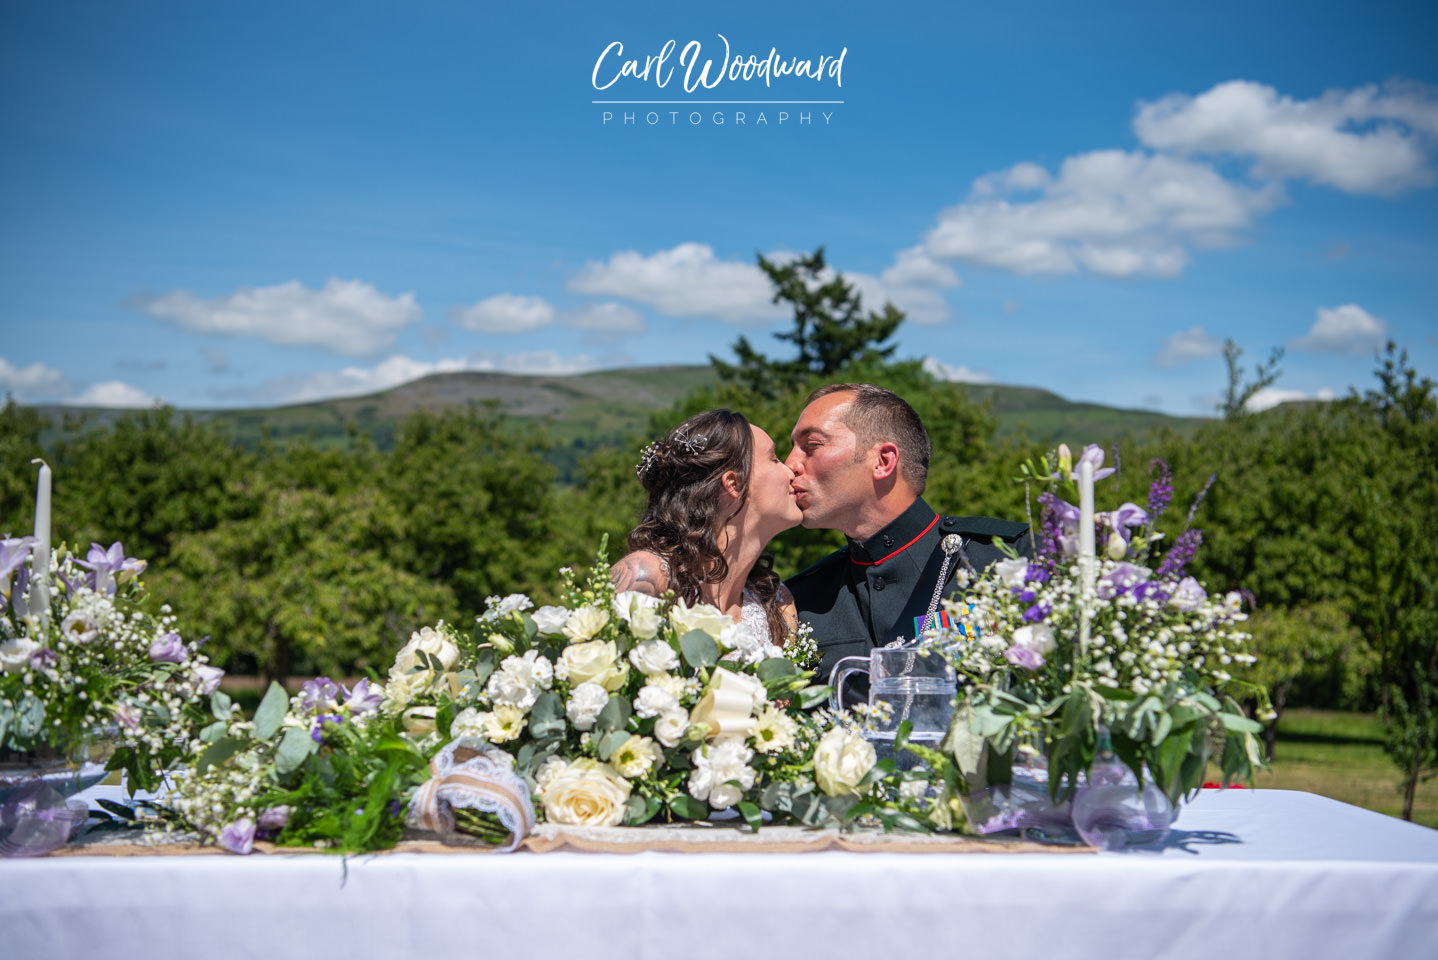 007-The-Old-Rectory-Hotel-Wedding-Photography-Cardiff-Wedding-Photographer.jpg